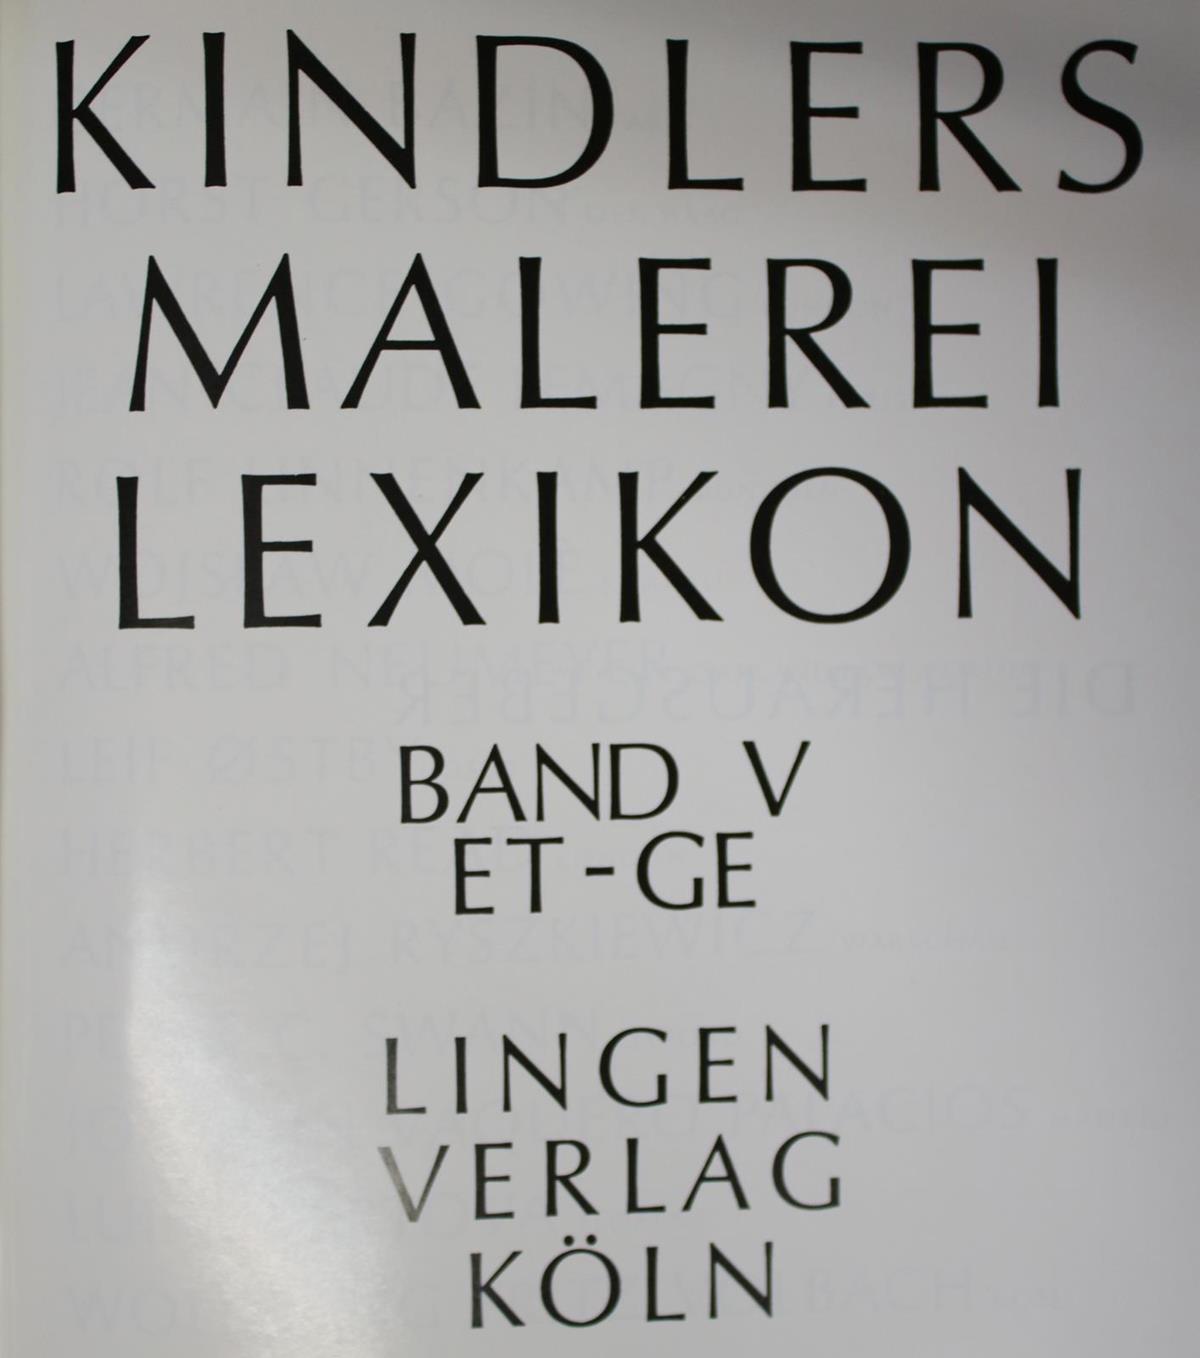 Kindlers Malerei Lexikon. | Bild Nr.2